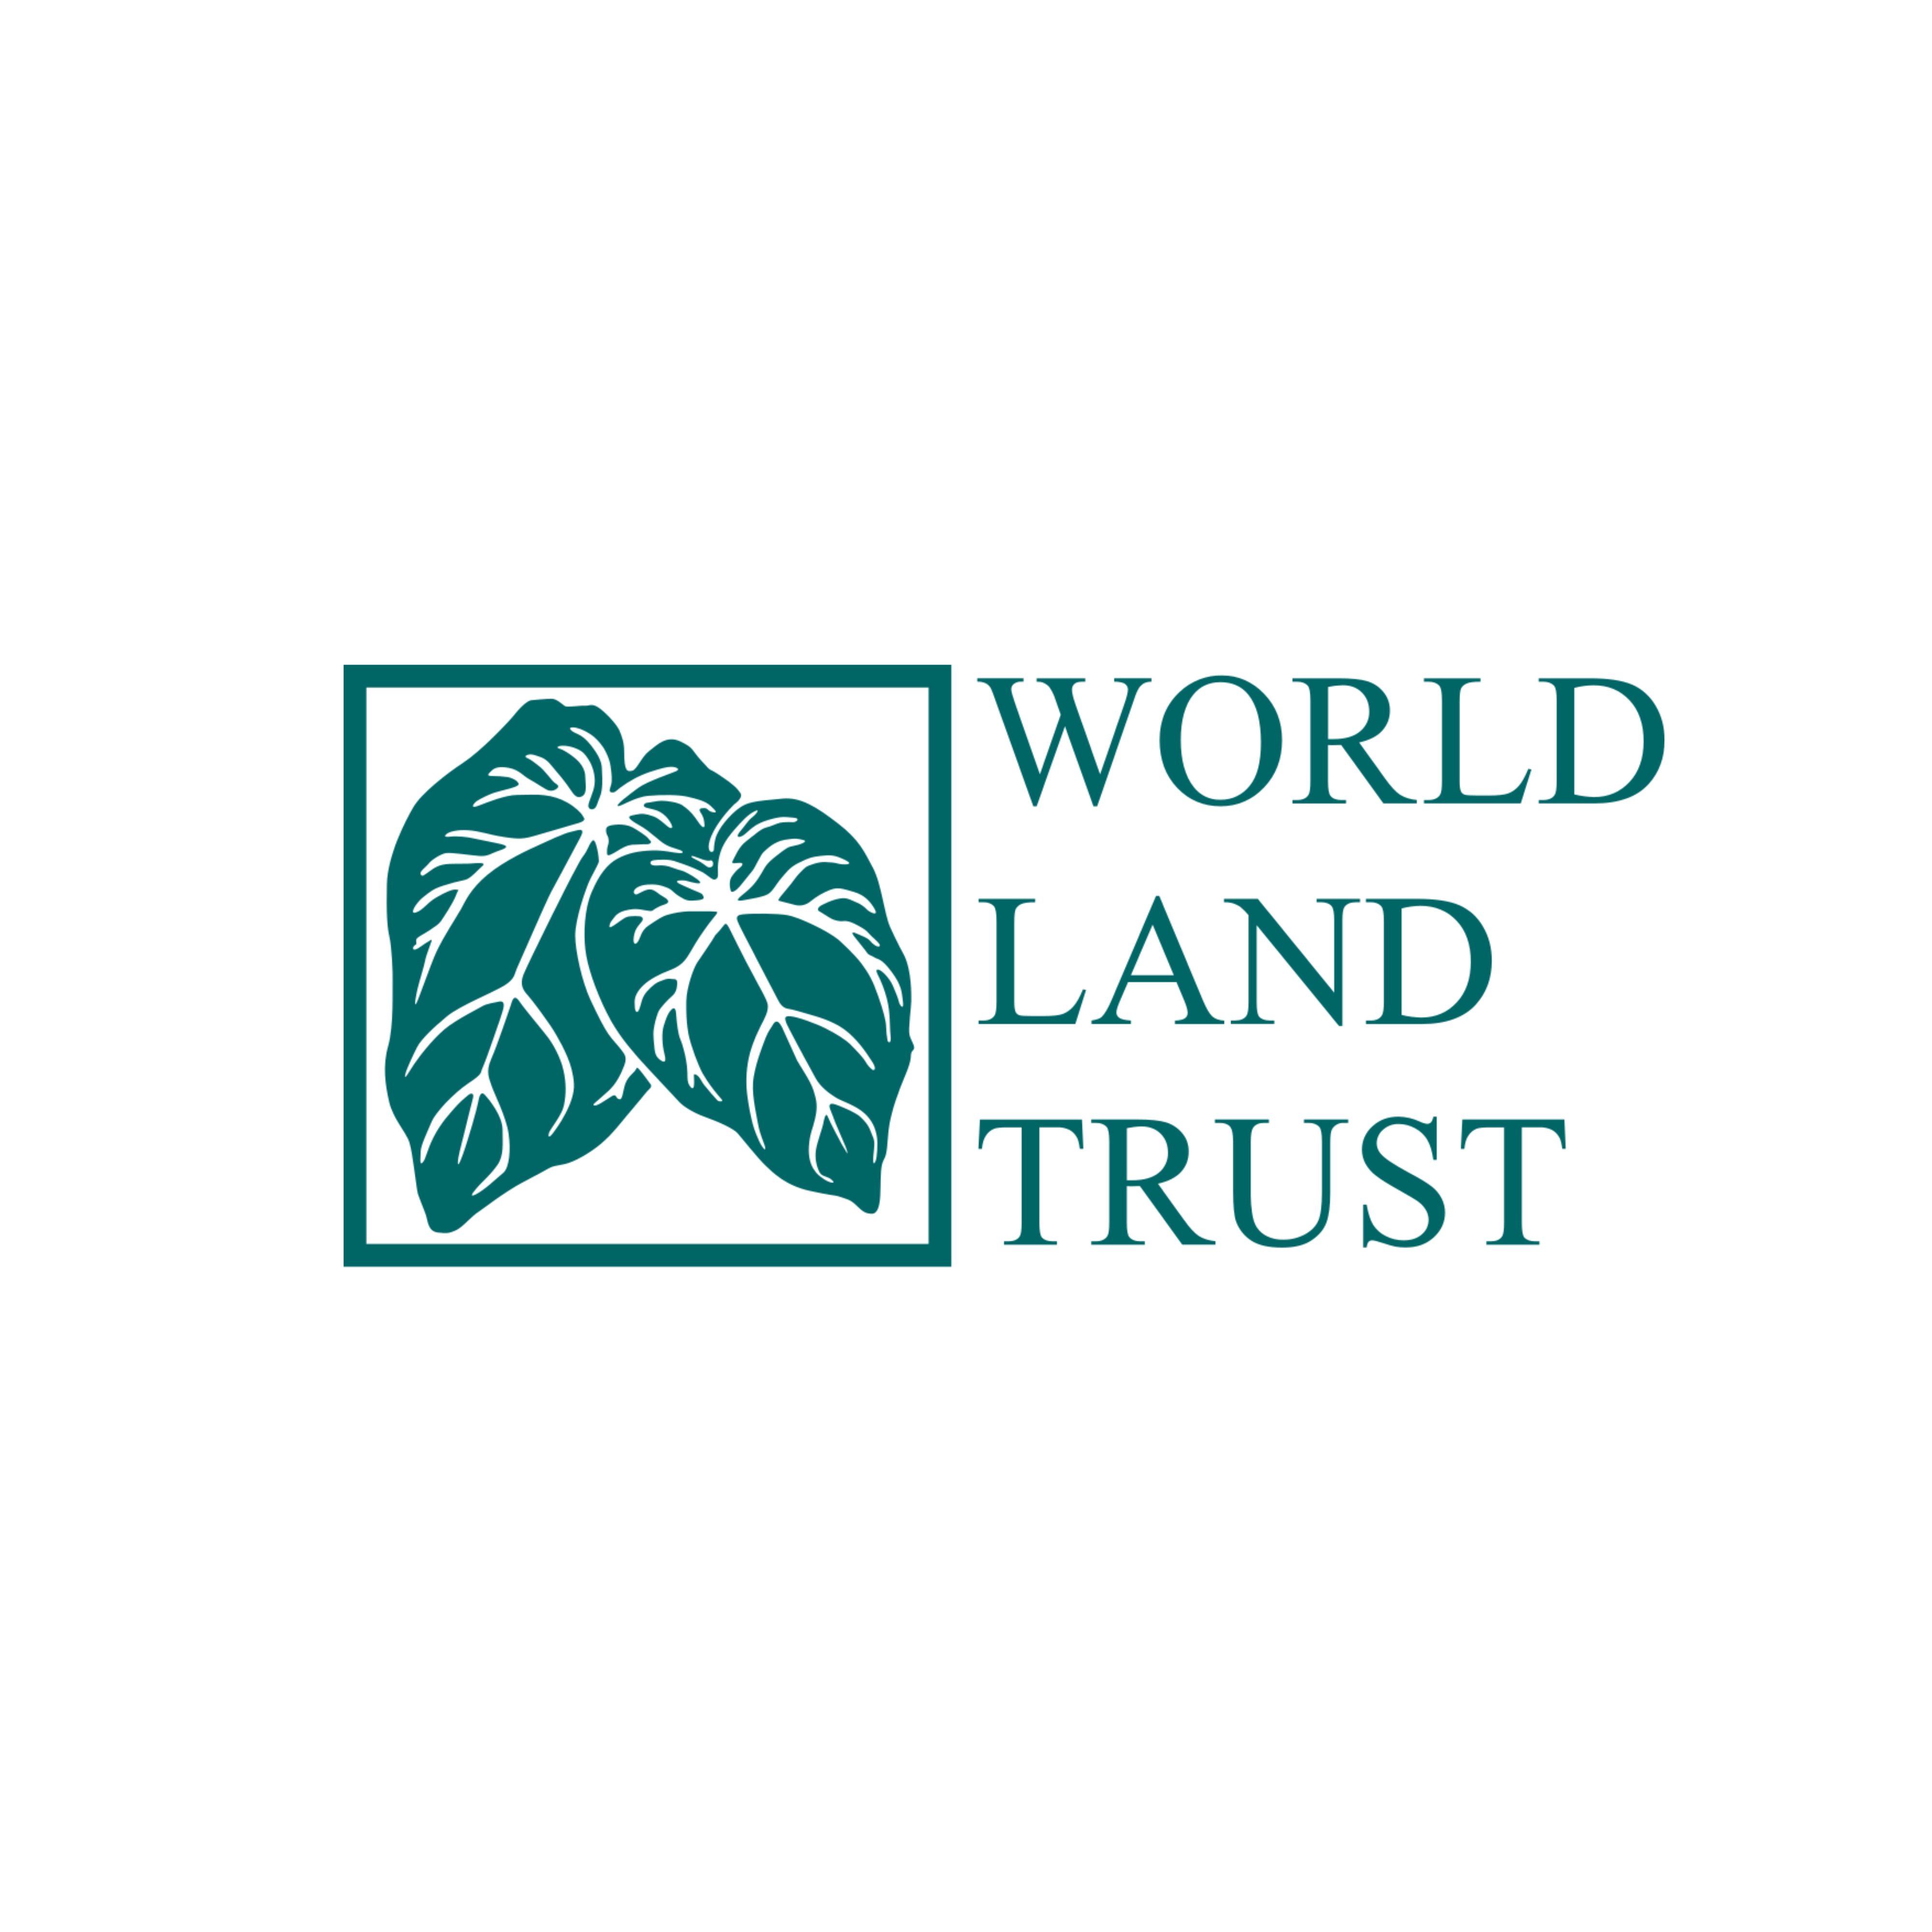 Finitas are sponsoring World Land Trust!